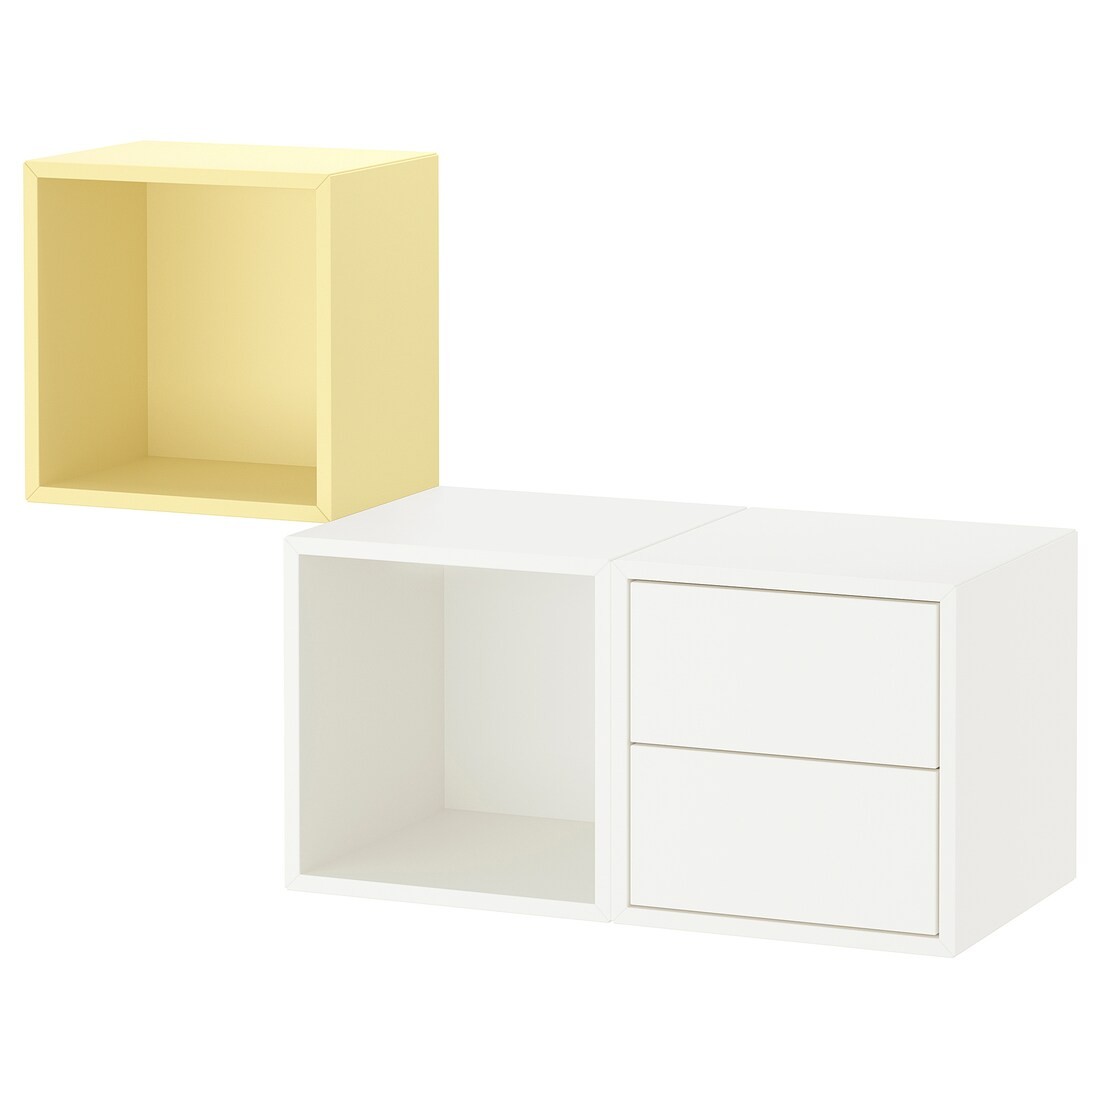 EKET Настенная комбинация для хранения, белый/бледно-желтый, 105x35x70 см